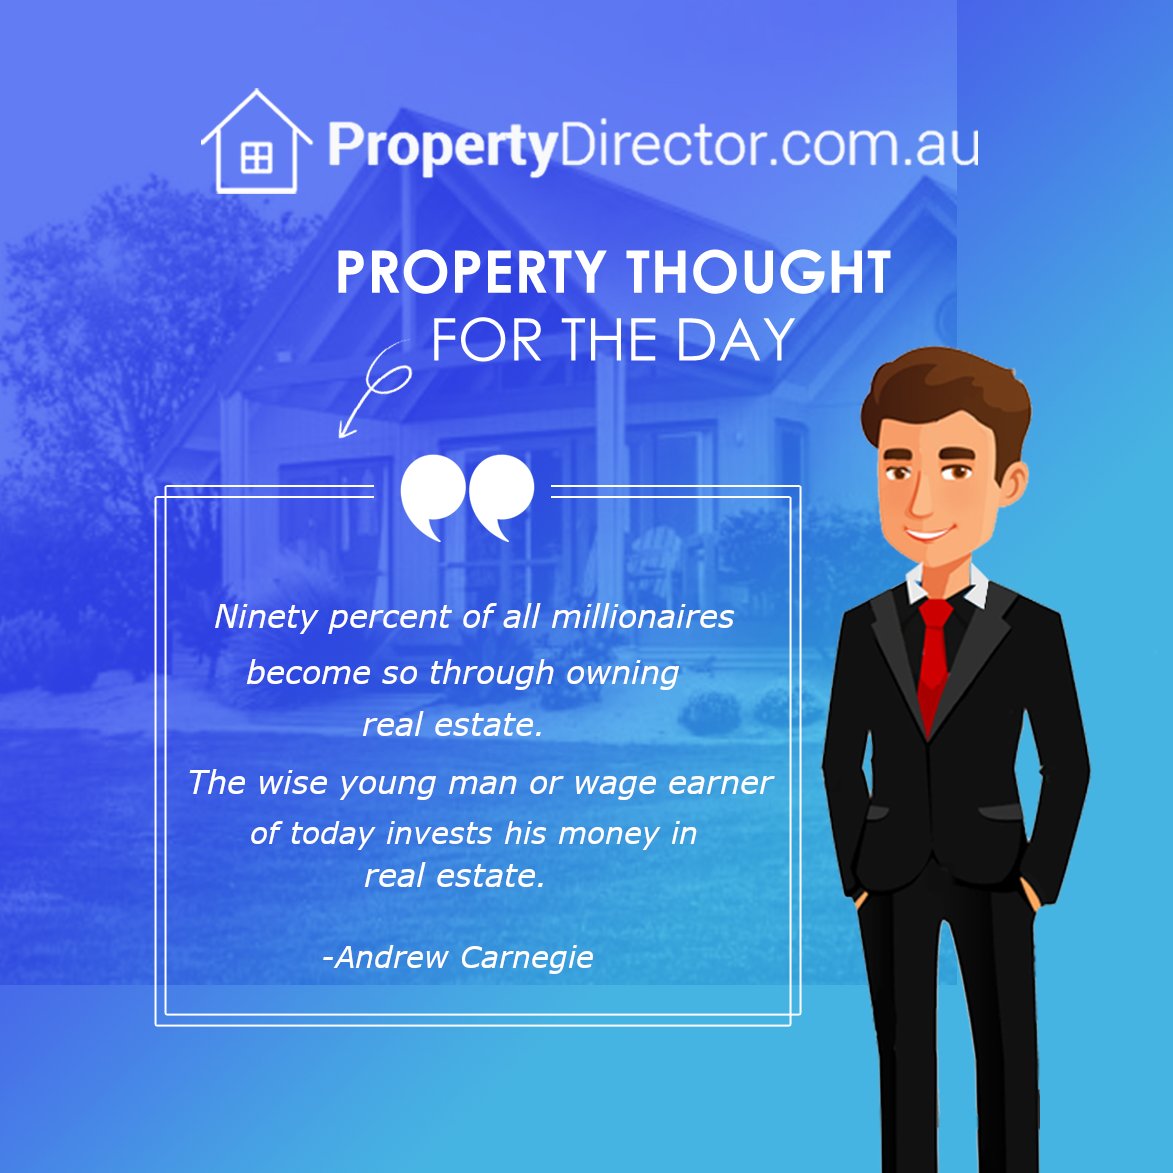 #propertyinvesting #propertyinvestingaustralia #propertydirector #propertyquotes #inspiration